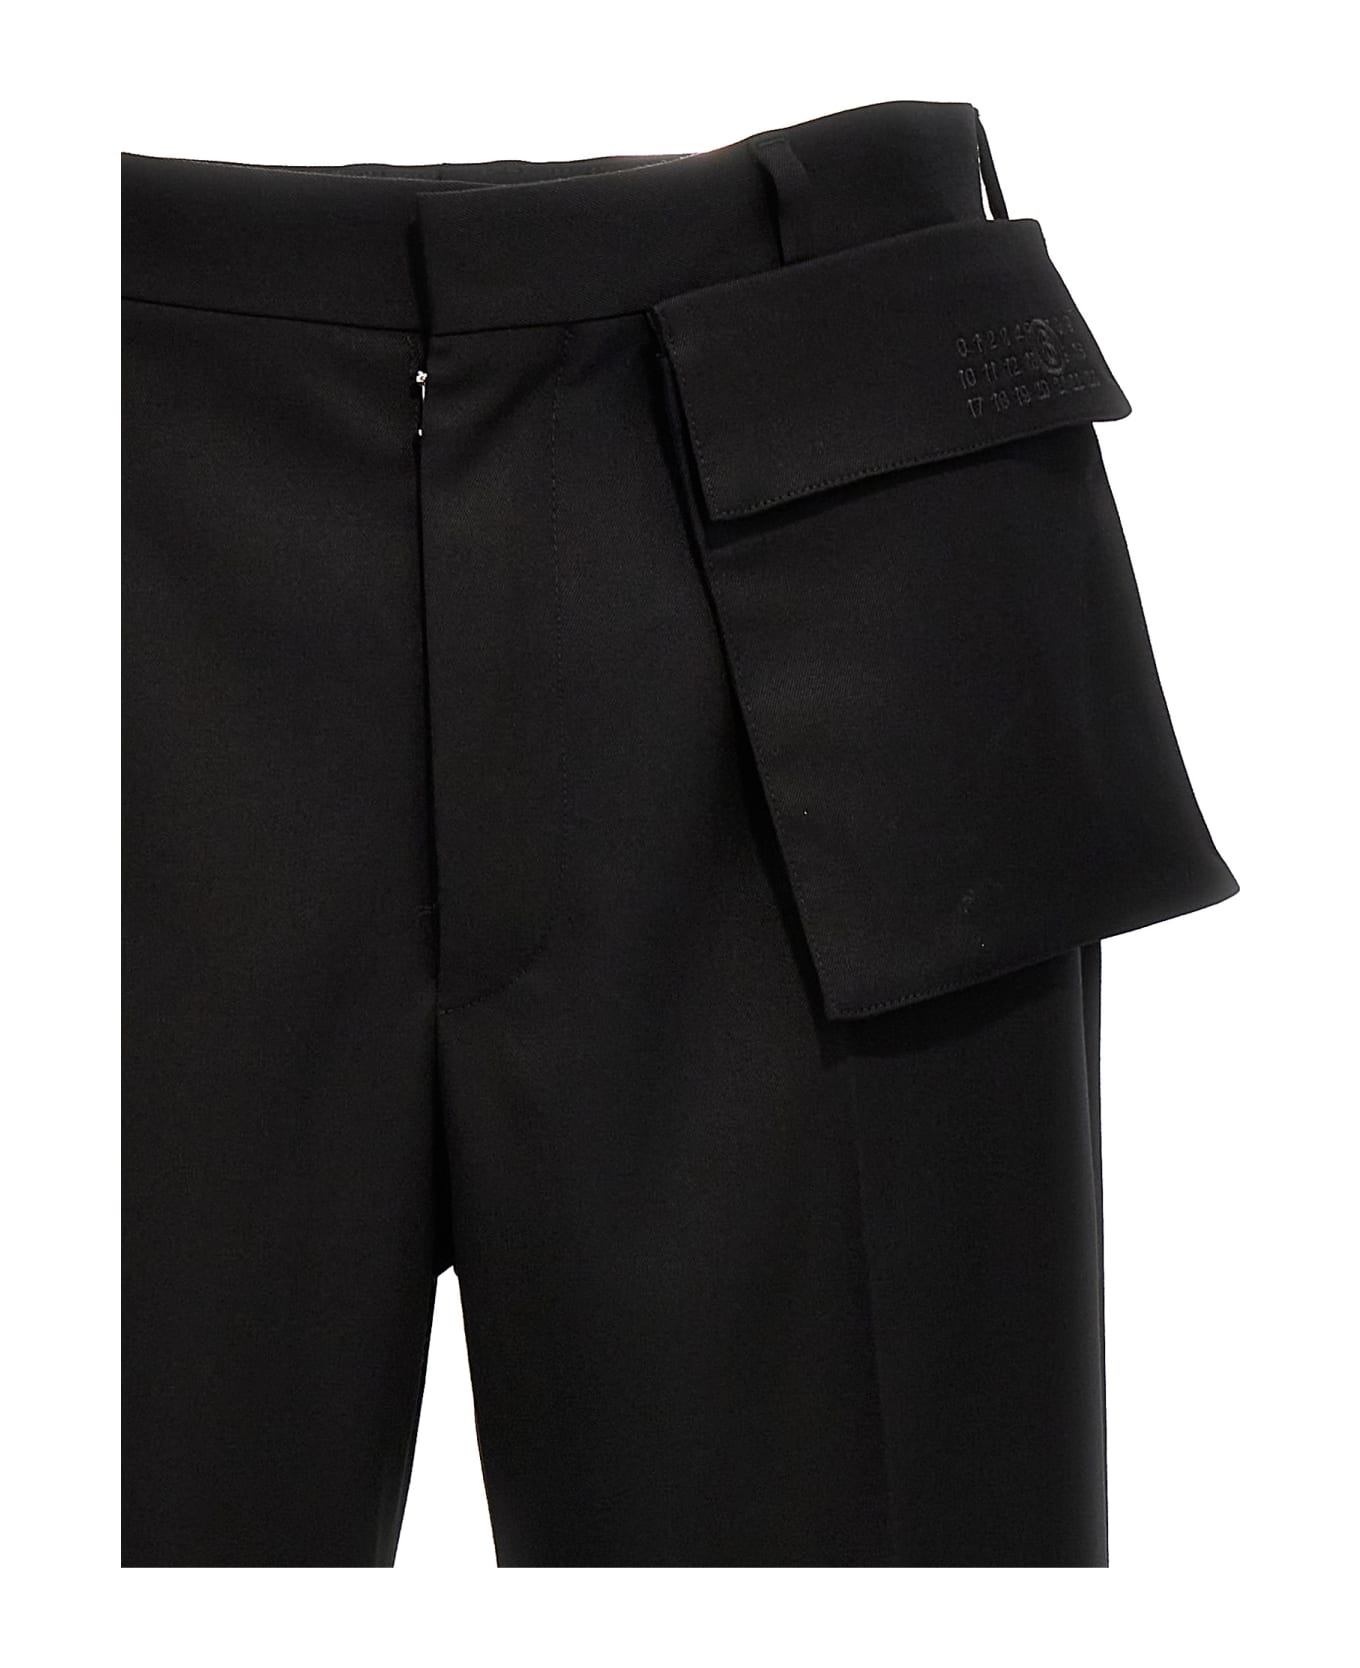 MM6 Maison Margiela Front Pocket Pants - Black